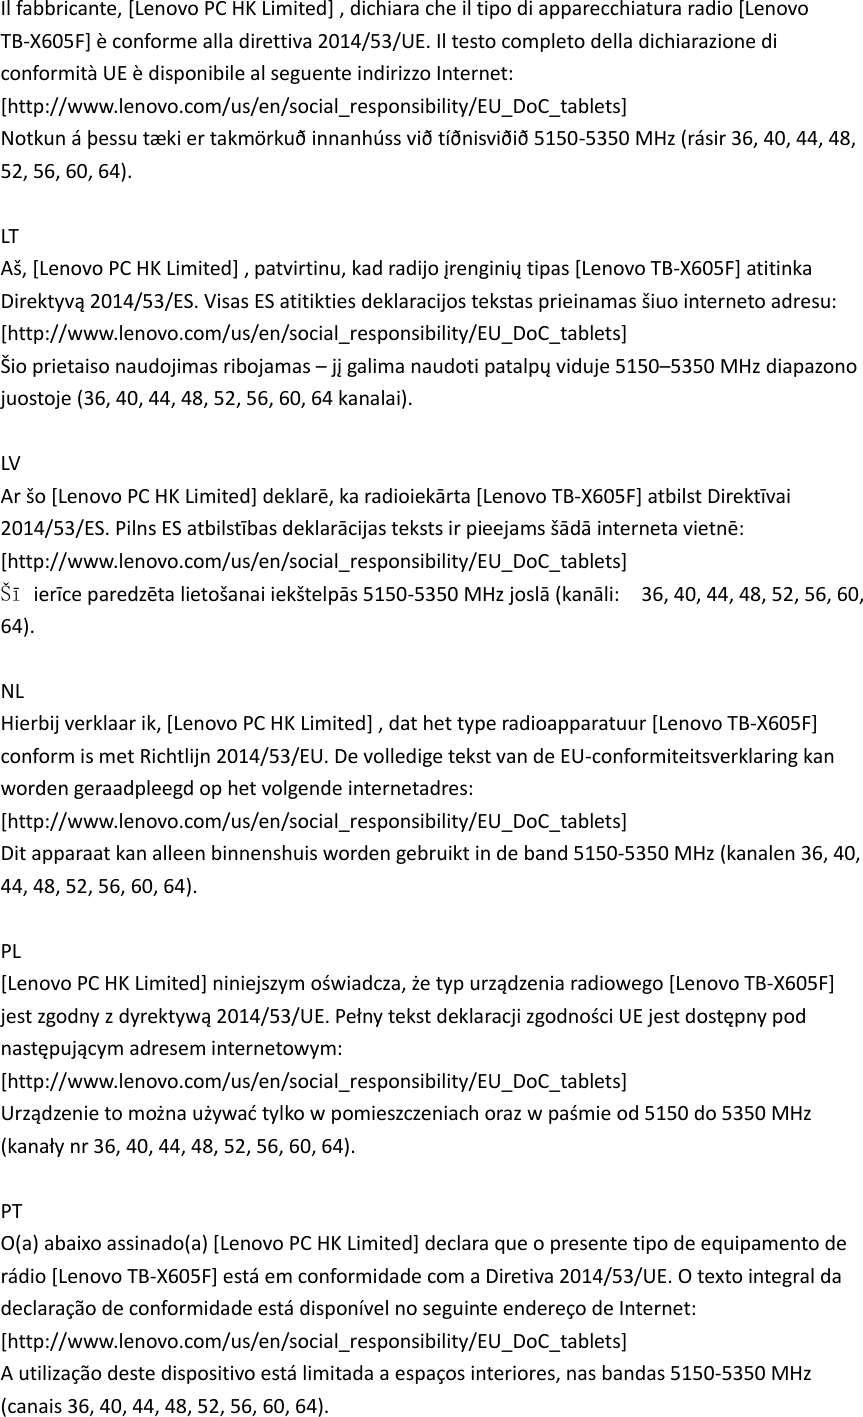 Il fabbricante, [Lenovo PC HK Limited] , dichiara che il tipo di apparecchiatura radio [Lenovo TB-X605F] è conforme alla direttiva 2014/53/UE. Il testo completo della dichiarazione di conformità UE è disponibile al seguente indirizzo Internet:   [http://www.lenovo.com/us/en/social_responsibility/EU_DoC_tablets]   Notkun á þessu tæ ki er takmörkuð innanhúss við tíðnisviðið 5150-5350 MHz (rásir 36, 40, 44, 48, 52, 56, 60, 64).  LT Aš, [Lenovo PC HK Limited] , patvirtinu, kad radijo įrenginių tipas [Lenovo TB-X605F] atitinka Direktyvą 2014/53/ES. Visas ES atitikties deklaracijos tekstas prieinamas šiuo interneto adresu: [http://www.lenovo.com/us/en/social_responsibility/EU_DoC_tablets] Šio prietaiso naudojimas ribojamas – jį galima naudoti patalpų viduje 5150–5350 MHz diapazono juostoje (36, 40, 44, 48, 52, 56, 60, 64 kanalai).  LV Ar šo [Lenovo PC HK Limited] deklarē, ka radioiekārta [Lenovo TB-X605F] atbilst Direktīvai 2014/53/ES. Pilns ES atbilstības deklarācijas teksts ir pieejams šādā interneta vietnē:   [http://www.lenovo.com/us/en/social_responsibility/EU_DoC_tablets]     Šī ierīce paredzēta lietošanai iekštelpās 5150-5350 MHz joslā (kanāli:    36, 40, 44, 48, 52, 56, 60, 64).  NL Hierbij verklaar ik, [Lenovo PC HK Limited] , dat het type radioapparatuur [Lenovo TB-X605F] conform is met Richtlijn 2014/53/EU. De volledige tekst van de EU-conformiteitsverklaring kan worden geraadpleegd op het volgende internetadres:   [http://www.lenovo.com/us/en/social_responsibility/EU_DoC_tablets] Dit apparaat kan alleen binnenshuis worden gebruikt in de band 5150-5350 MHz (kanalen 36, 40, 44, 48, 52, 56, 60, 64).  PL [Lenovo PC HK Limited] niniejszym oświadcza, że typ urządzenia radiowego [Lenovo TB-X605F] jest zgodny z dyrektywą 2014/53/UE. Pełny tekst deklaracji zgodności UE jest dostępny pod następującym adresem internetowym:   [http://www.lenovo.com/us/en/social_responsibility/EU_DoC_tablets]   Urządzenie to można używać tylko w pomieszczeniach oraz w paśmie od 5150 do 5350 MHz (kanały nr 36, 40, 44, 48, 52, 56, 60, 64).  PT O(a) abaixo assinado(a) [Lenovo PC HK Limited] declara que o presente tipo de equipamento de rádio [Lenovo TB-X605F] está em conformidade com a Diretiva 2014/53/UE. O texto integral da declaração de conformidade está disponível no seguinte endereço de Internet:   [http://www.lenovo.com/us/en/social_responsibility/EU_DoC_tablets] A utilização deste dispositivo está limitada a espaços interiores, nas bandas 5150-5350 MHz (canais 36, 40, 44, 48, 52, 56, 60, 64). 